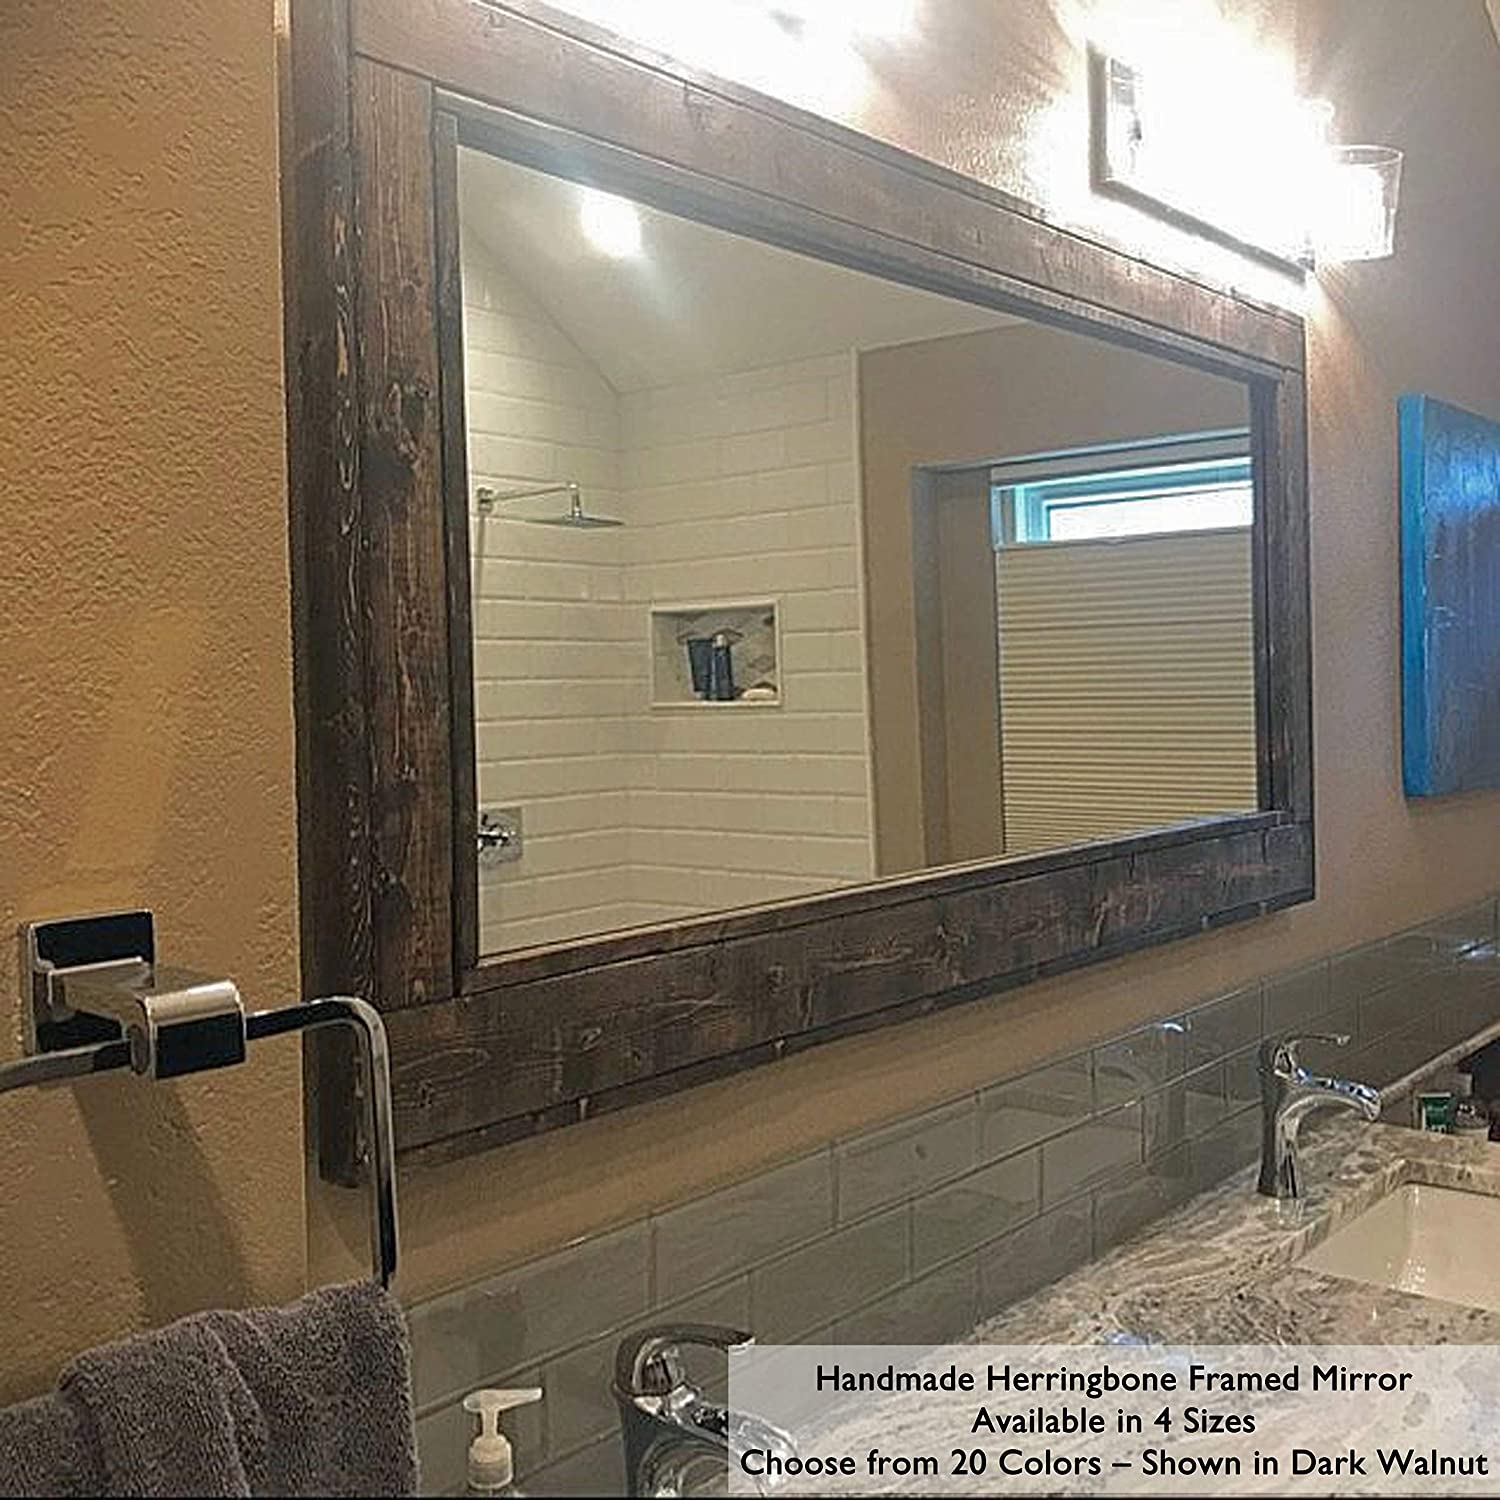 Large Wood Framed Mirror Visualhunt, Large Wood Framed Mirror For Bathroom